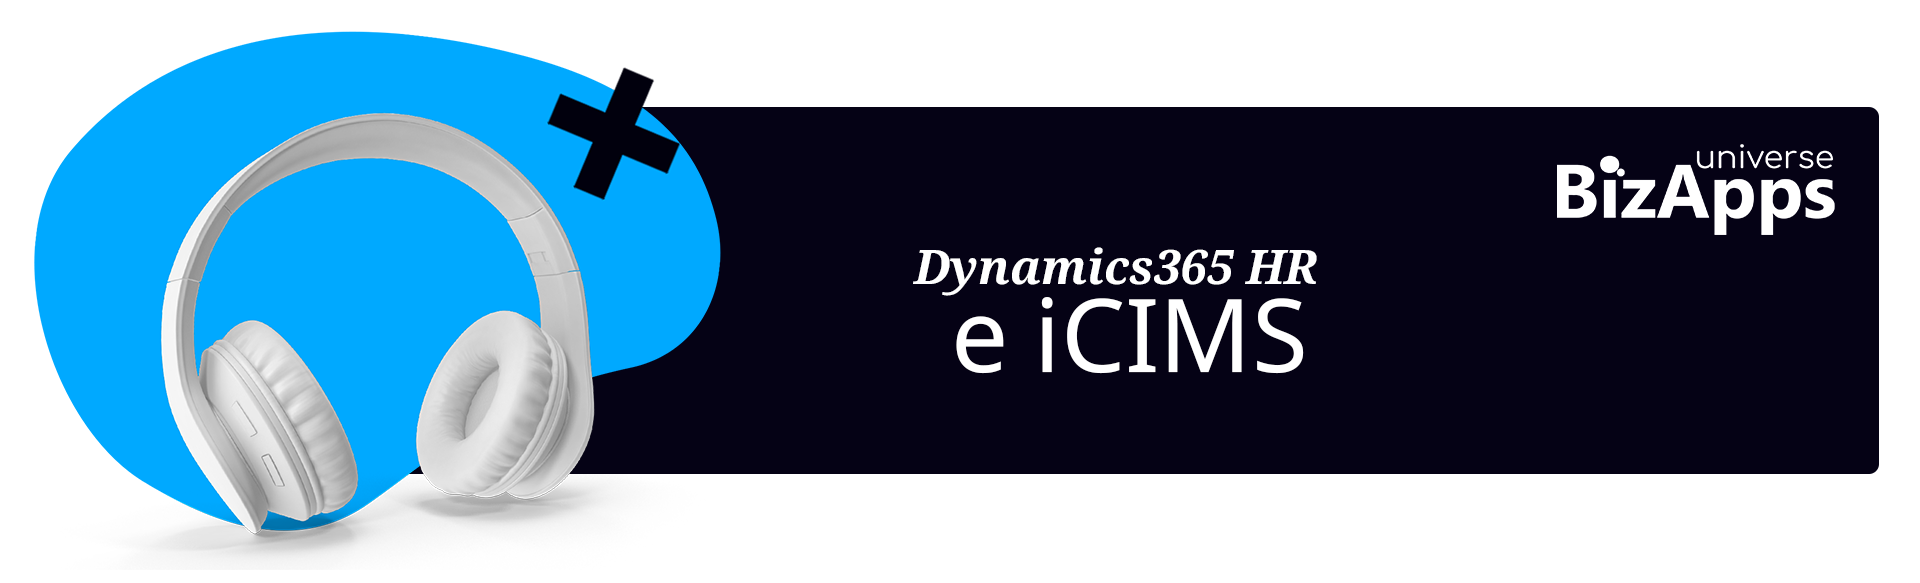 Capítulo X Dynamics365 Human Resources e iCIMS Axazure